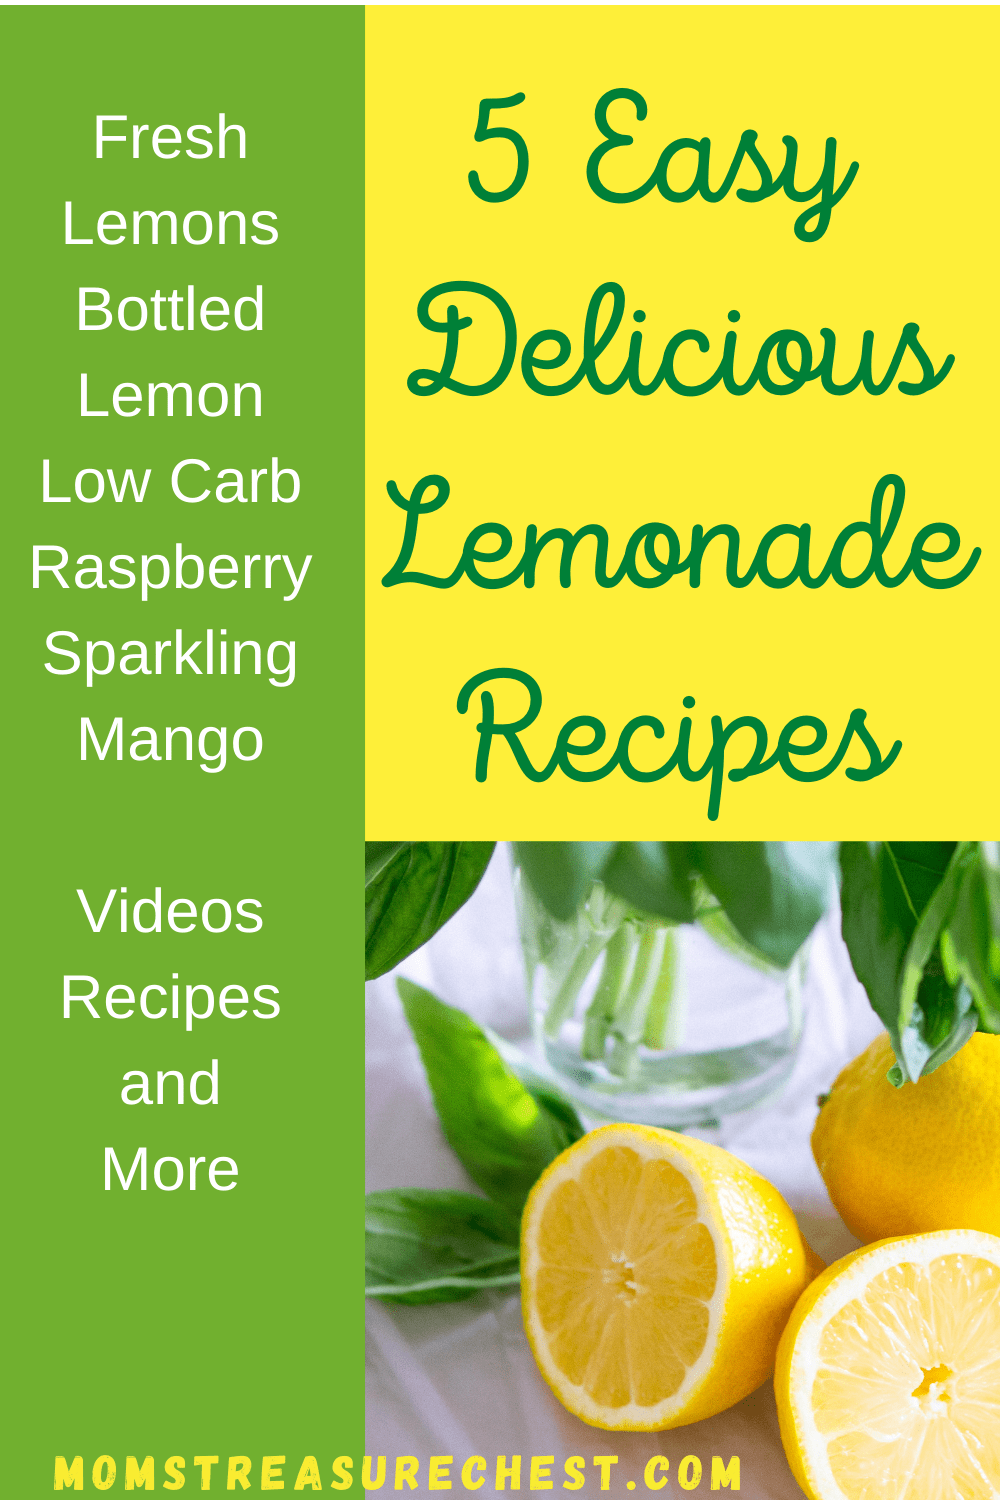 5 Easy Lemonade Recipes - Moms Treasure Chest